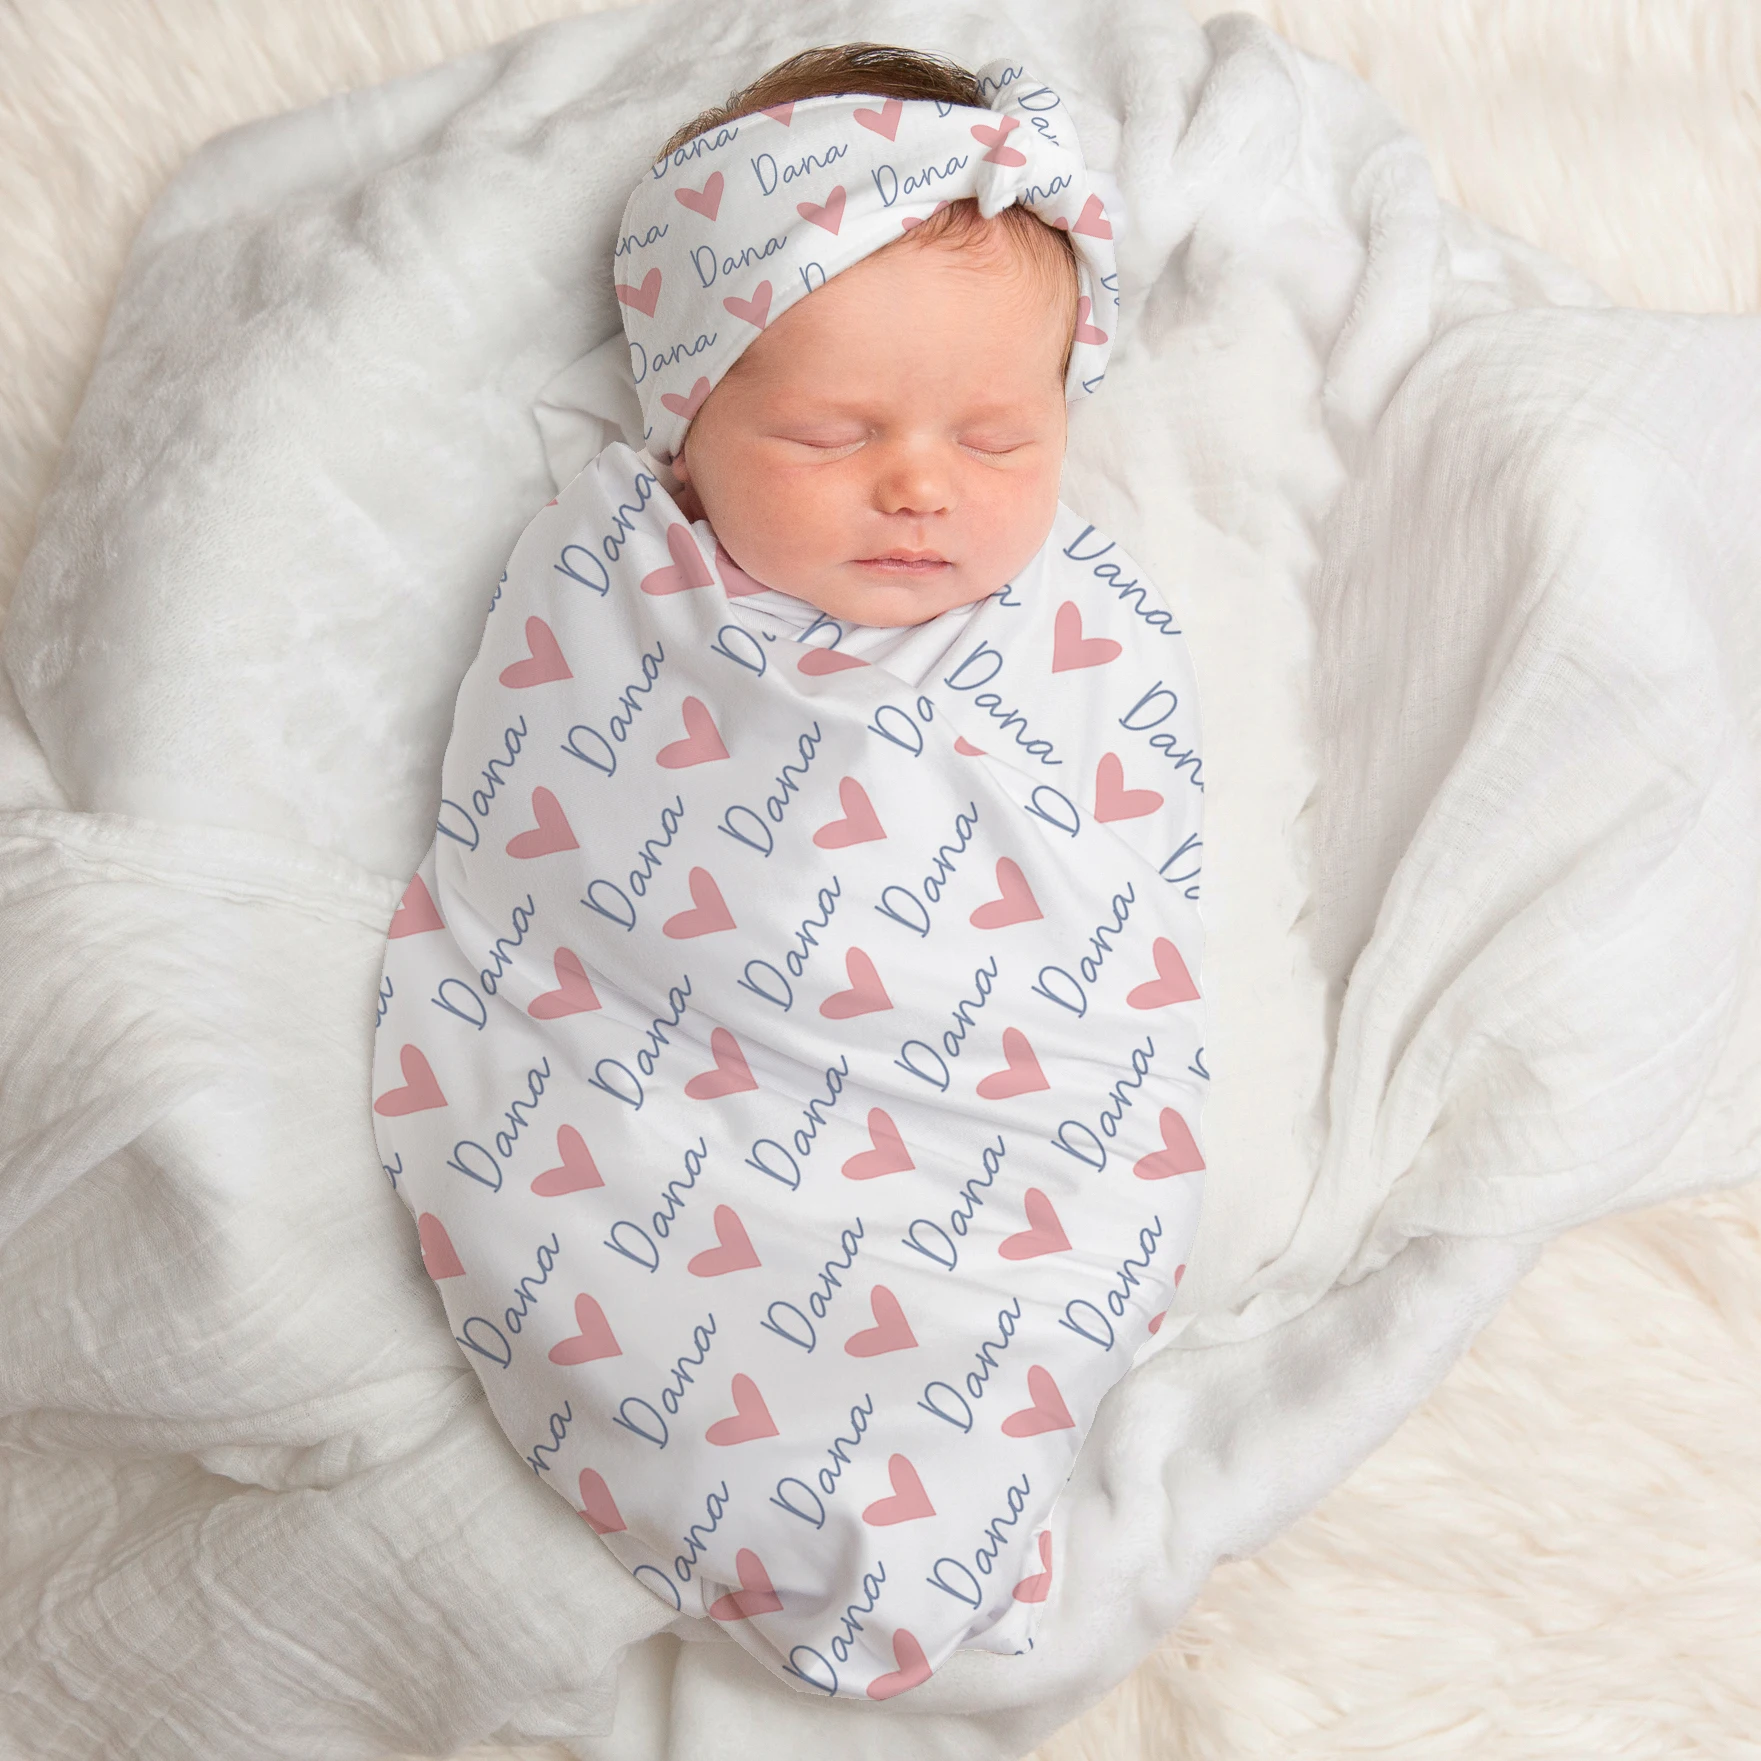 Custom Name Personalized Baby Swaddle Wrap Cotton Jersey Newborn Baby Girl Swaddle Set Baby Birthday Gift For Newborn Girls Boys